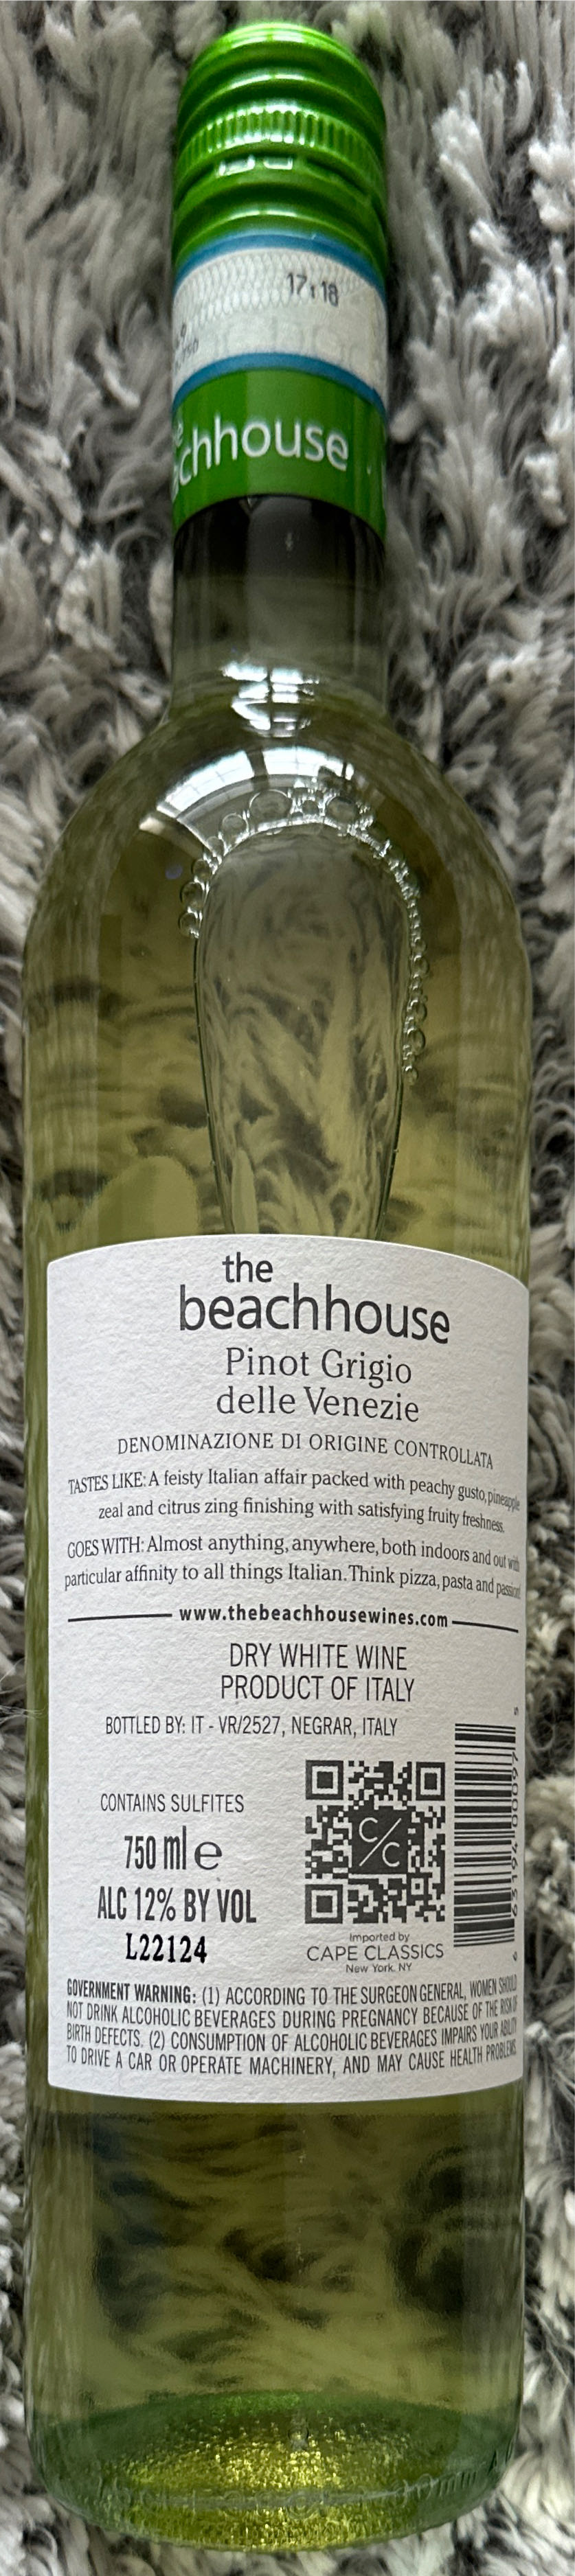 Douglas Green The Beach House Pinot Grigio 750ml  (750 mL) alcohol collectible [Barcode 663194000975] - Main Image 2